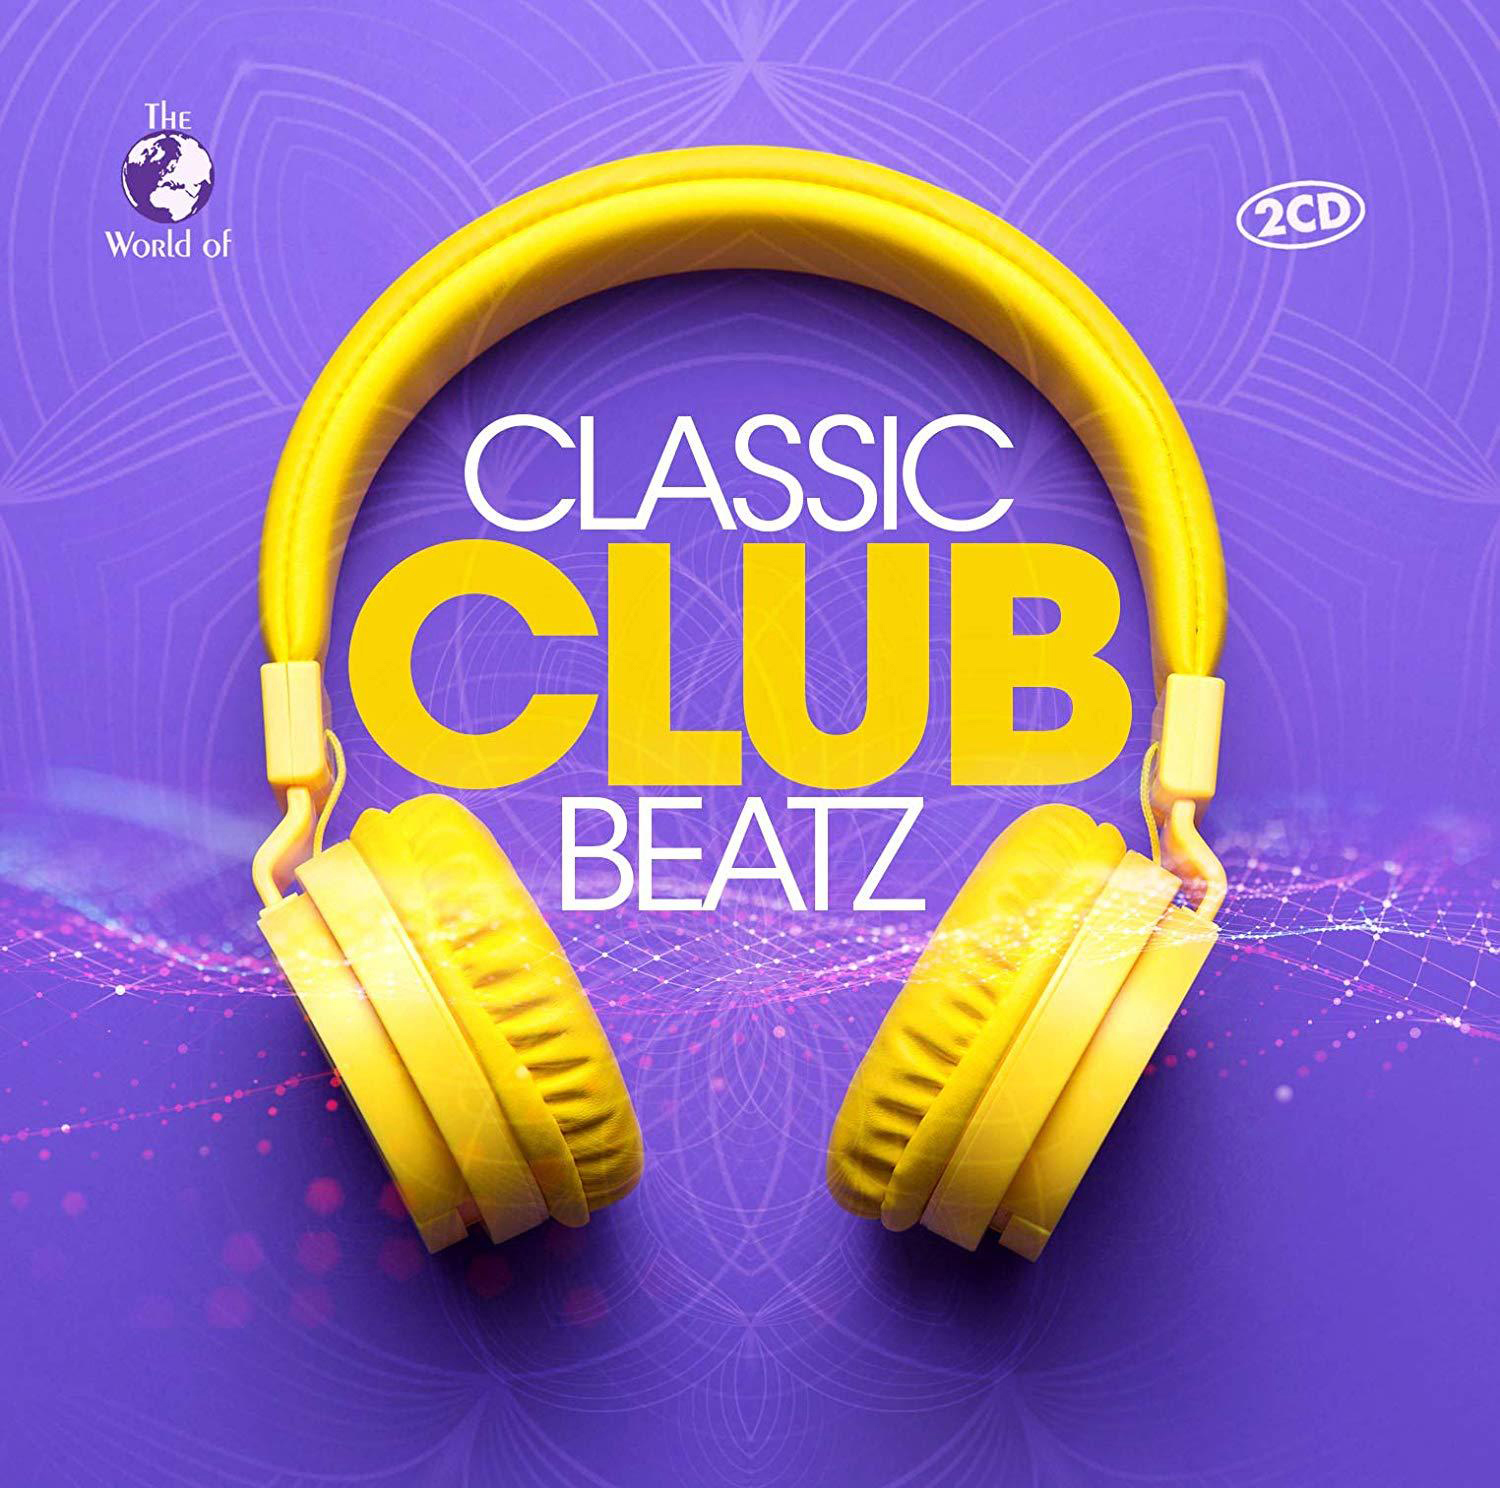 VARIOUS - Classic Club (CD) Beatz 